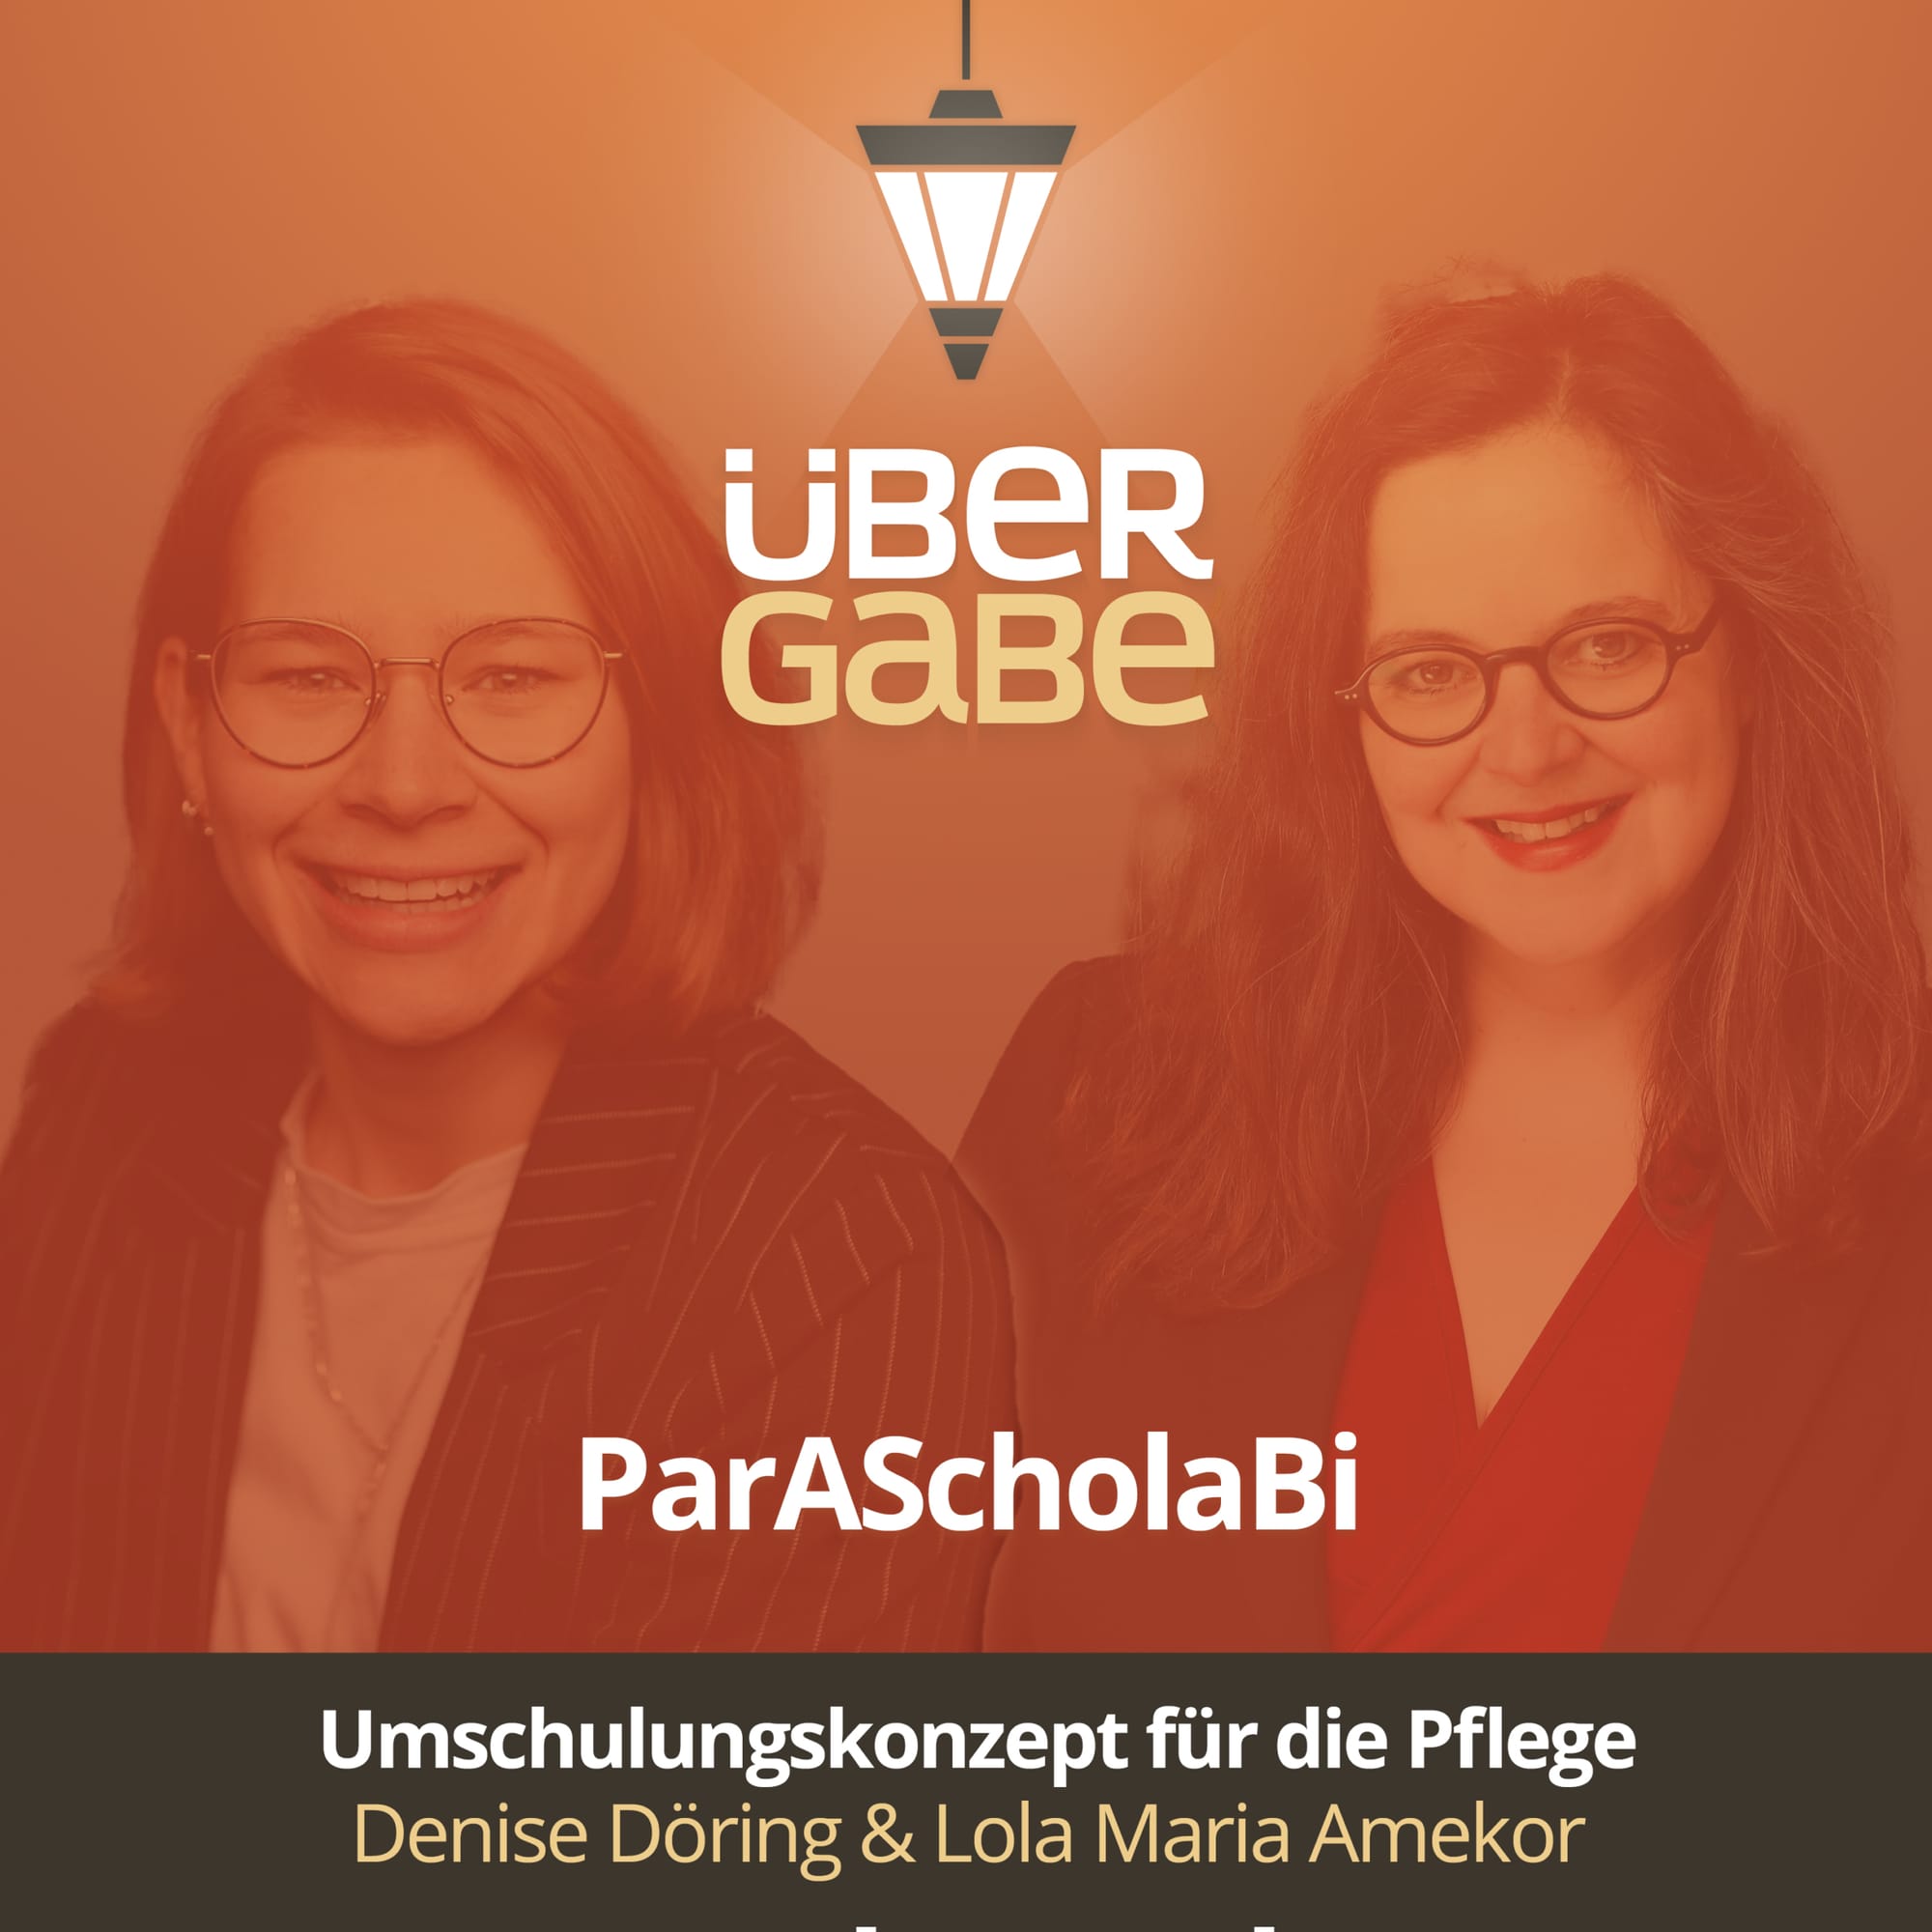 ParAScholaBi (Denise Döring & Lola Maria Amekor)